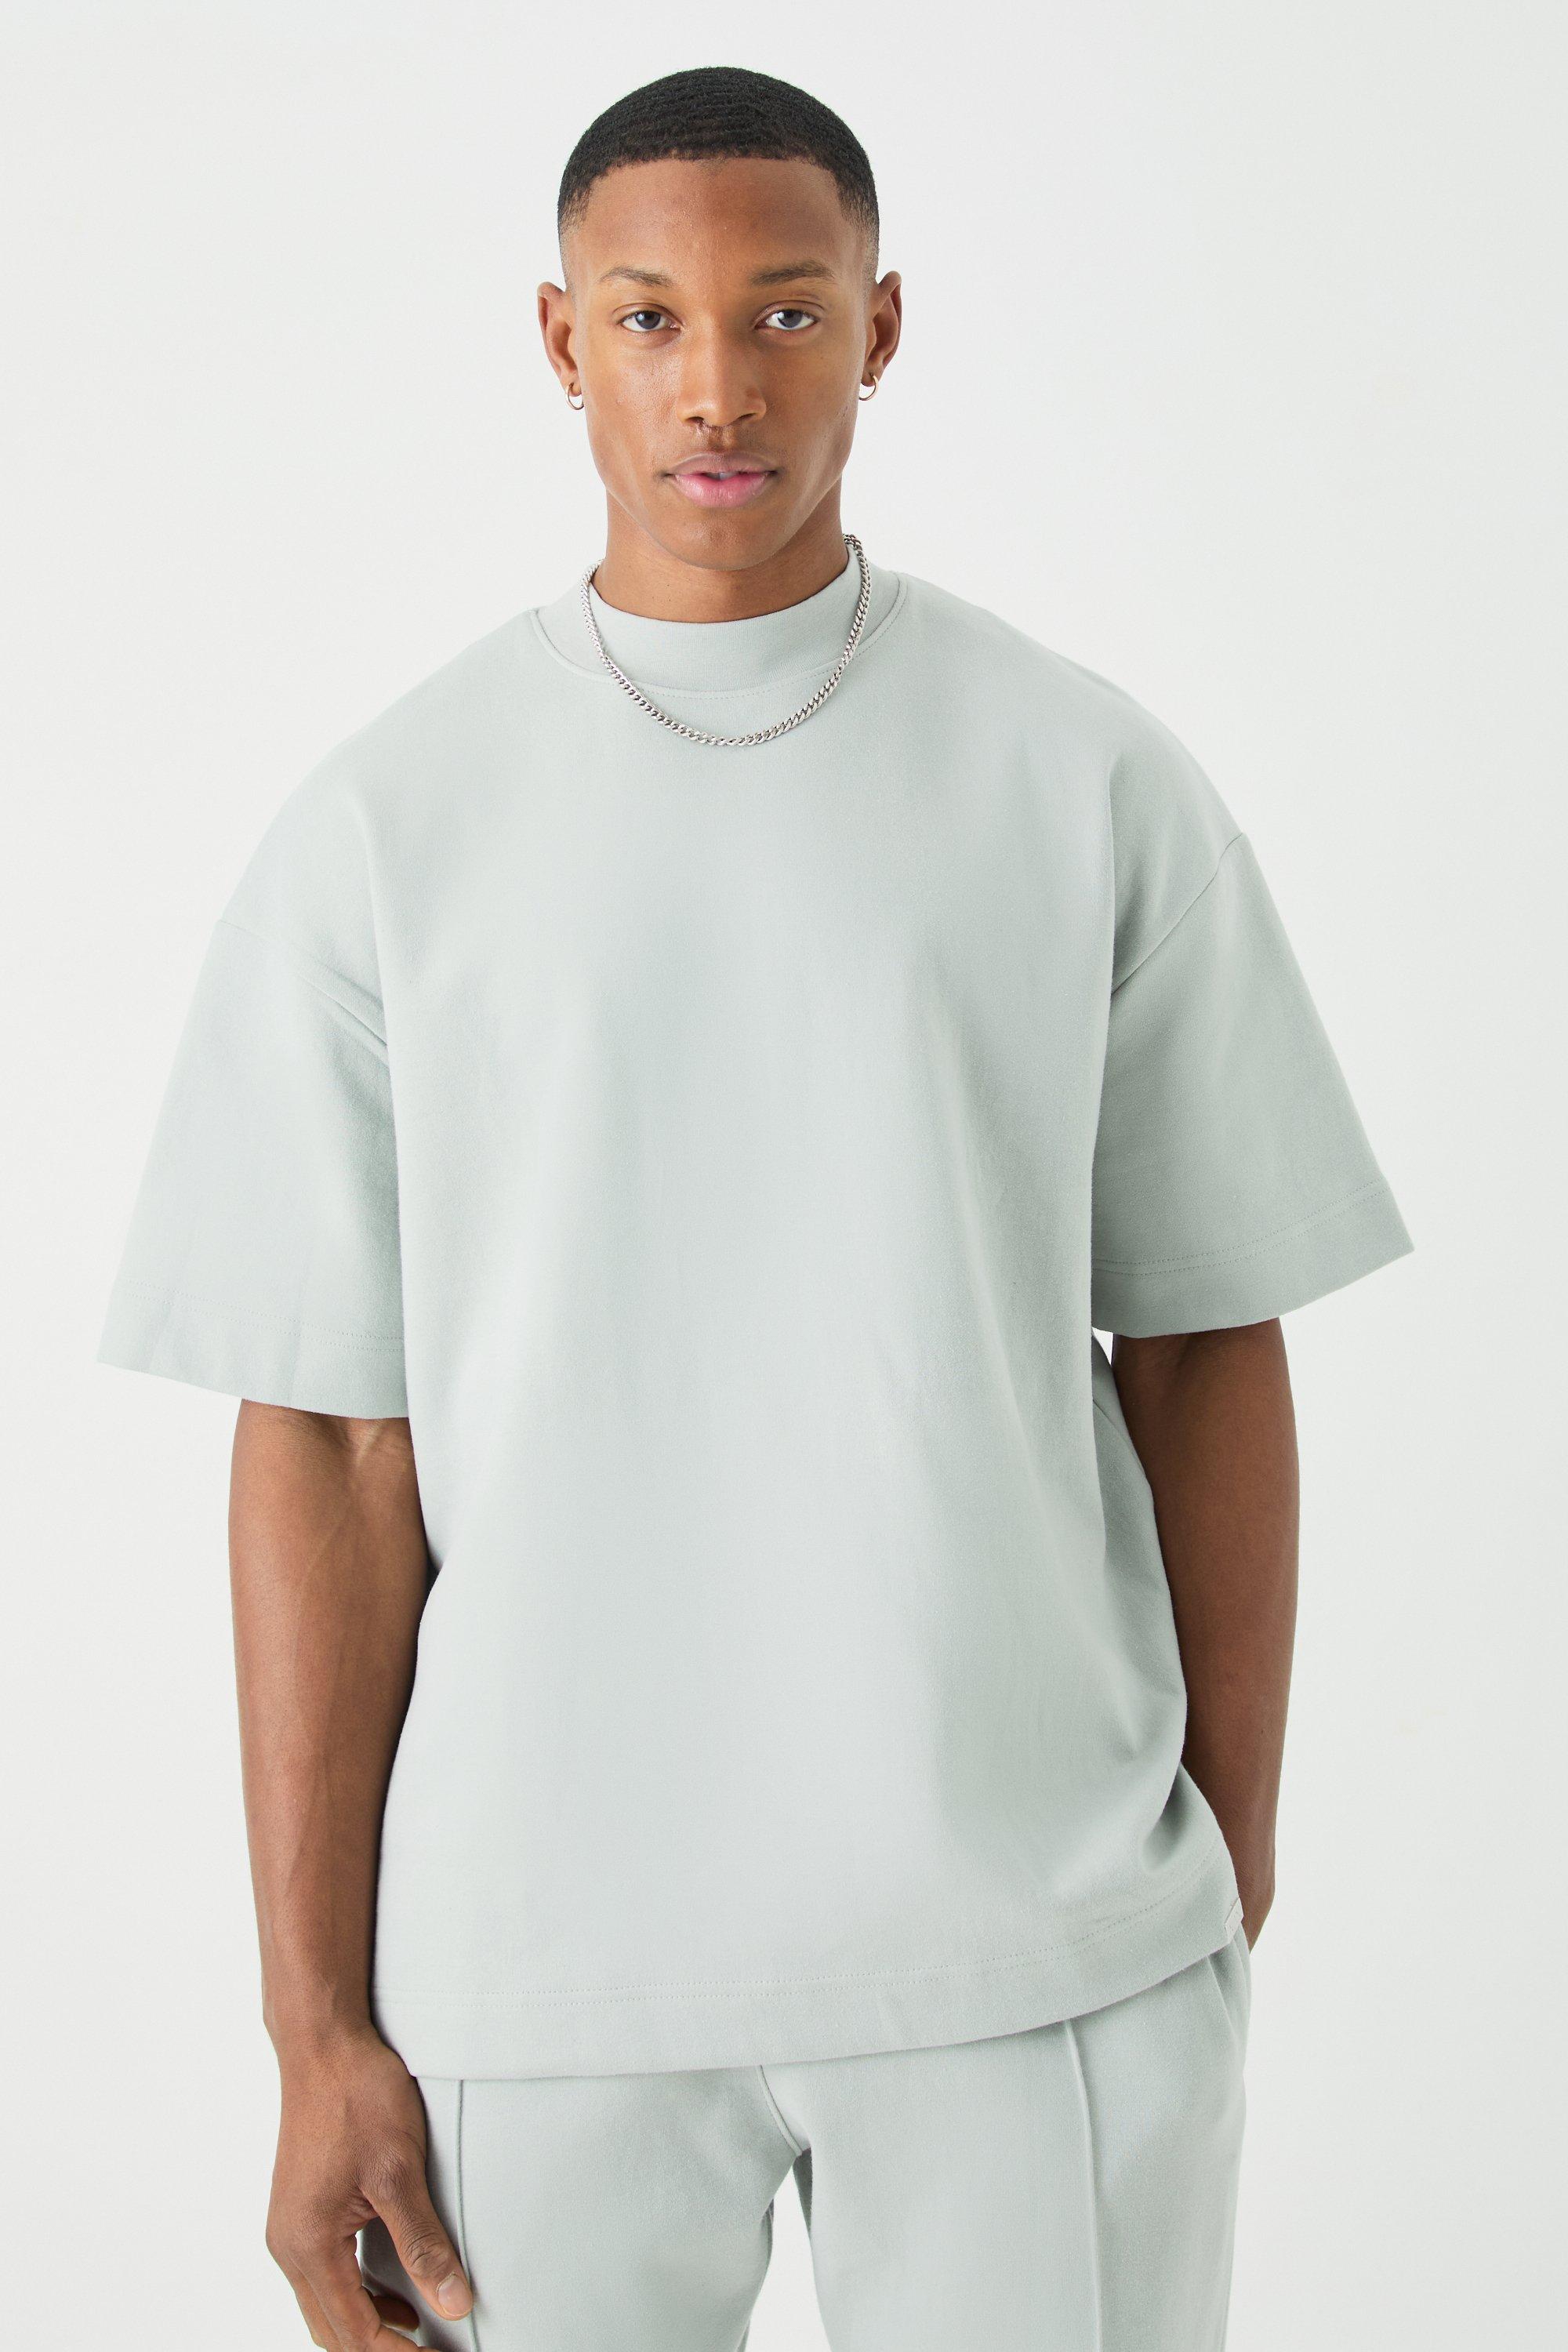 men's man oversized extended neck heavy interlock t-shirt - grey - s, grey